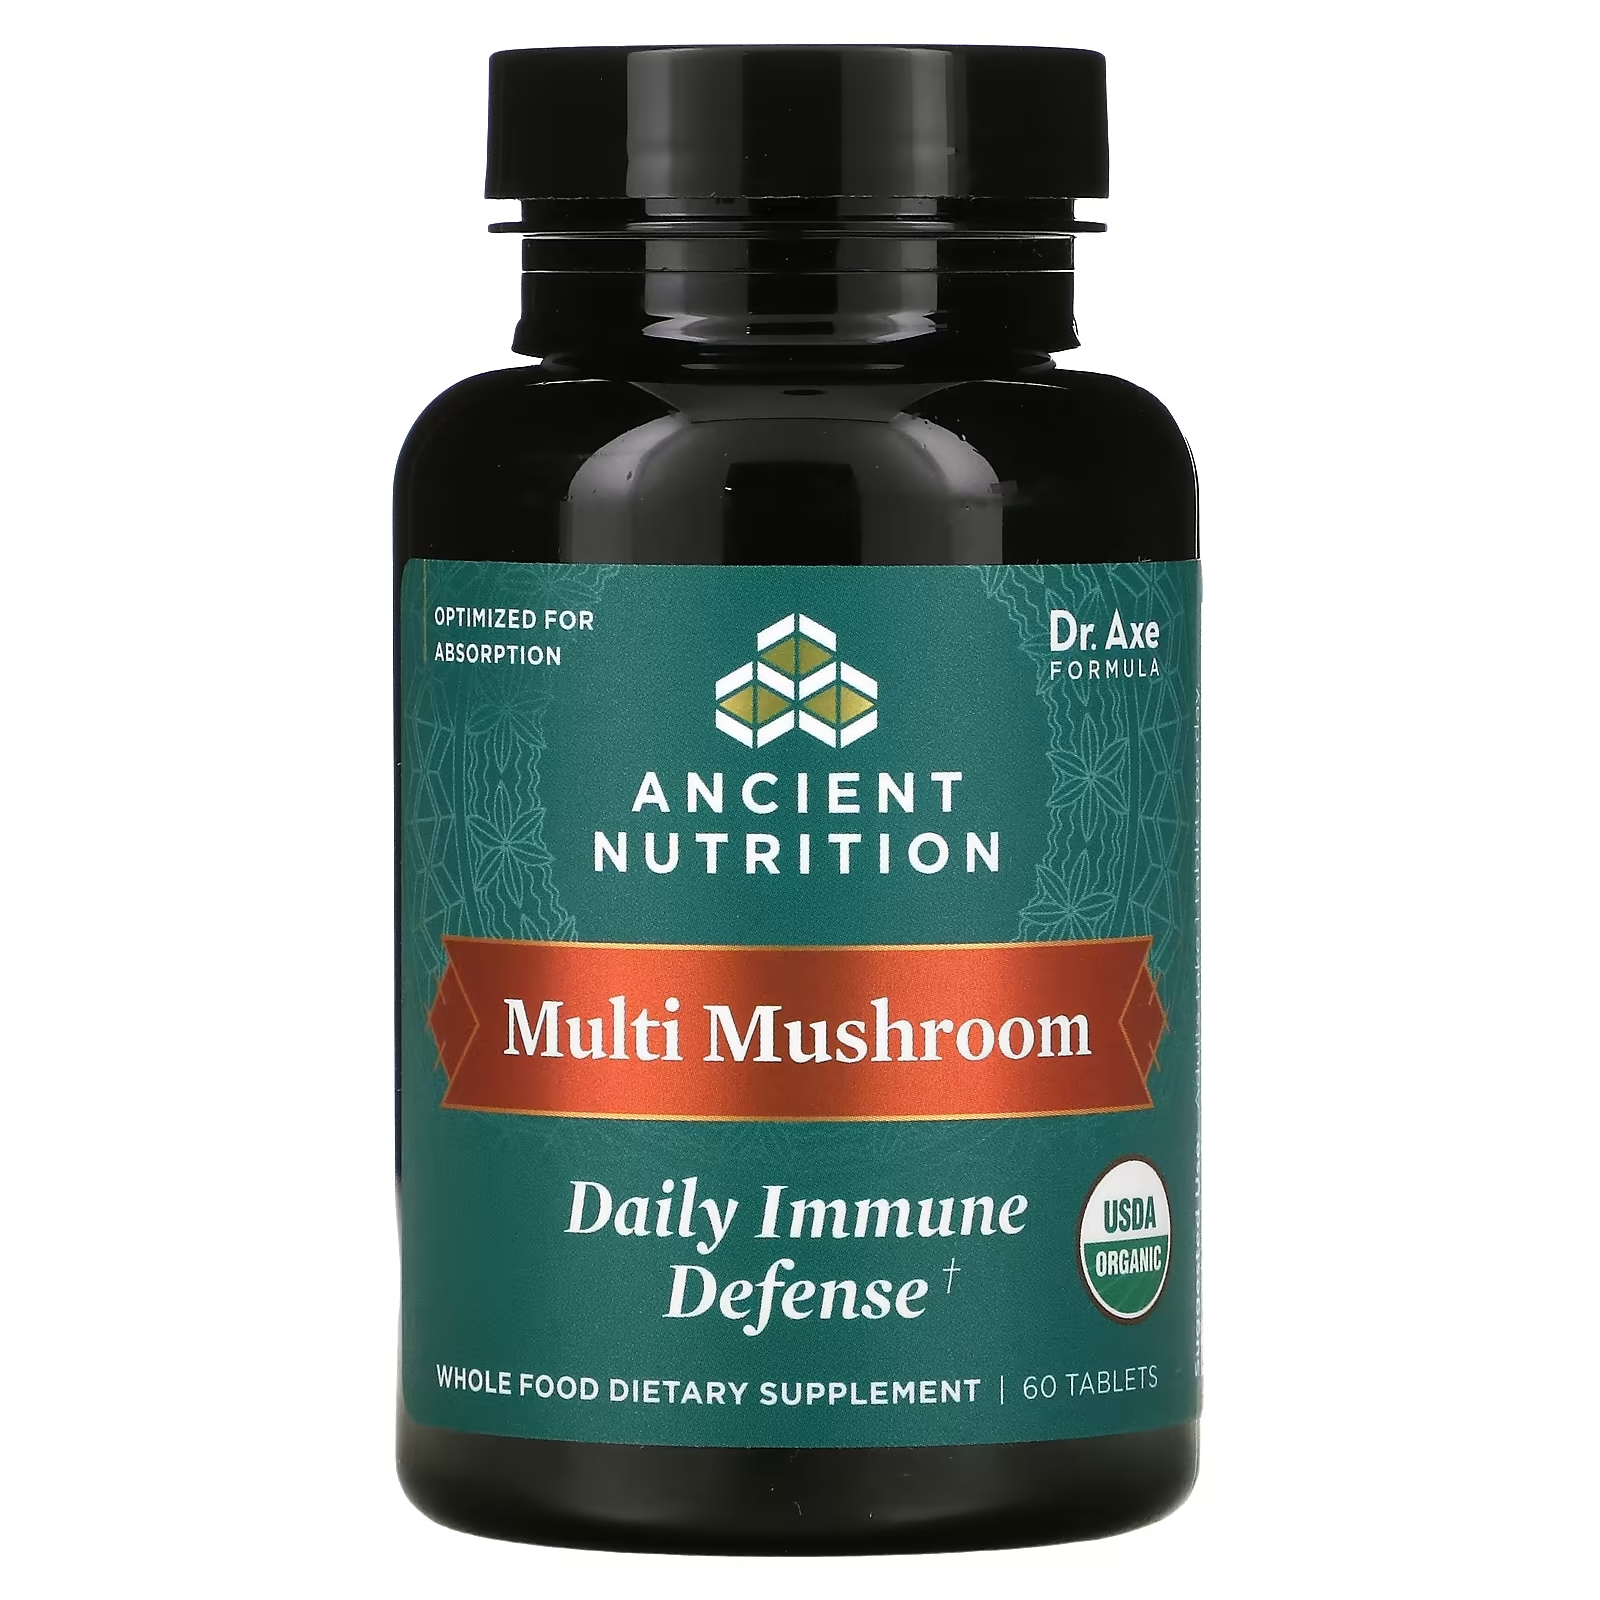 Dr. Axe Ancient Nutrition Multi Mushroom ежедневная защита иммунитета, 60 таблеток dr axe ancient nutrition multi mushroom ежедневная иммунная защита 30 таблеток